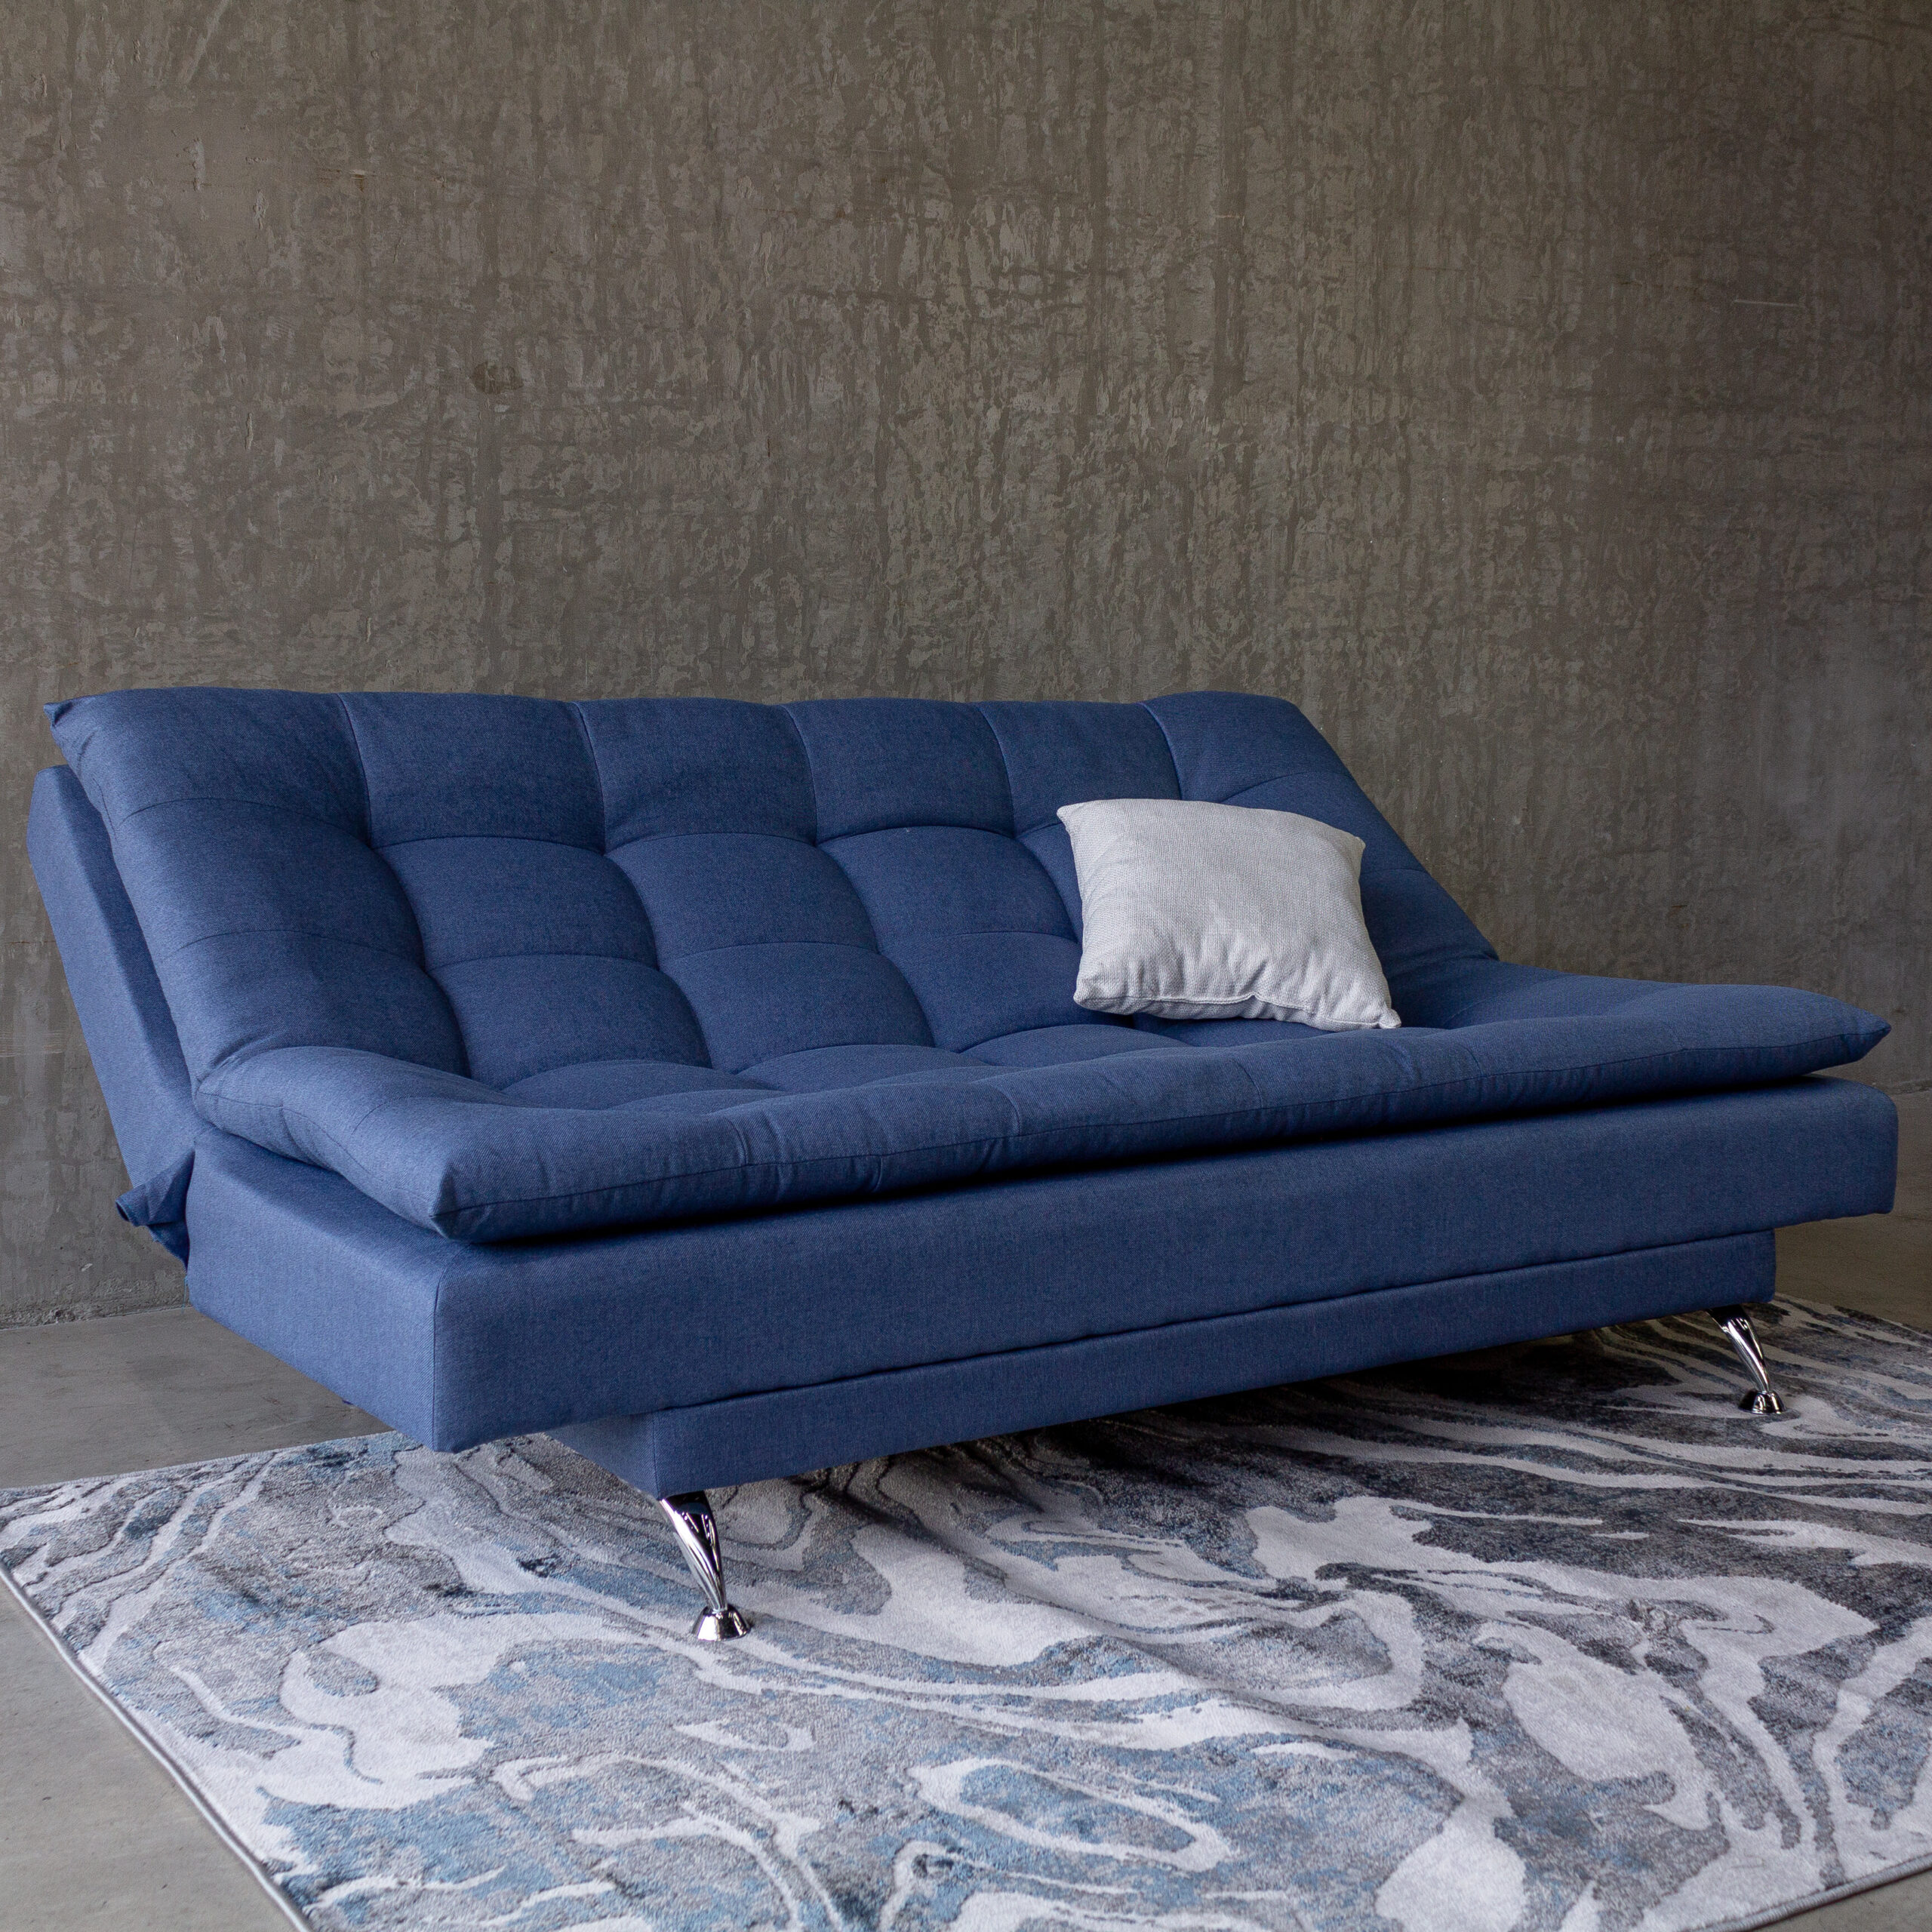 sentido común diseñador labio Sofa Cama Matrimonial azul | Alamo Muebles